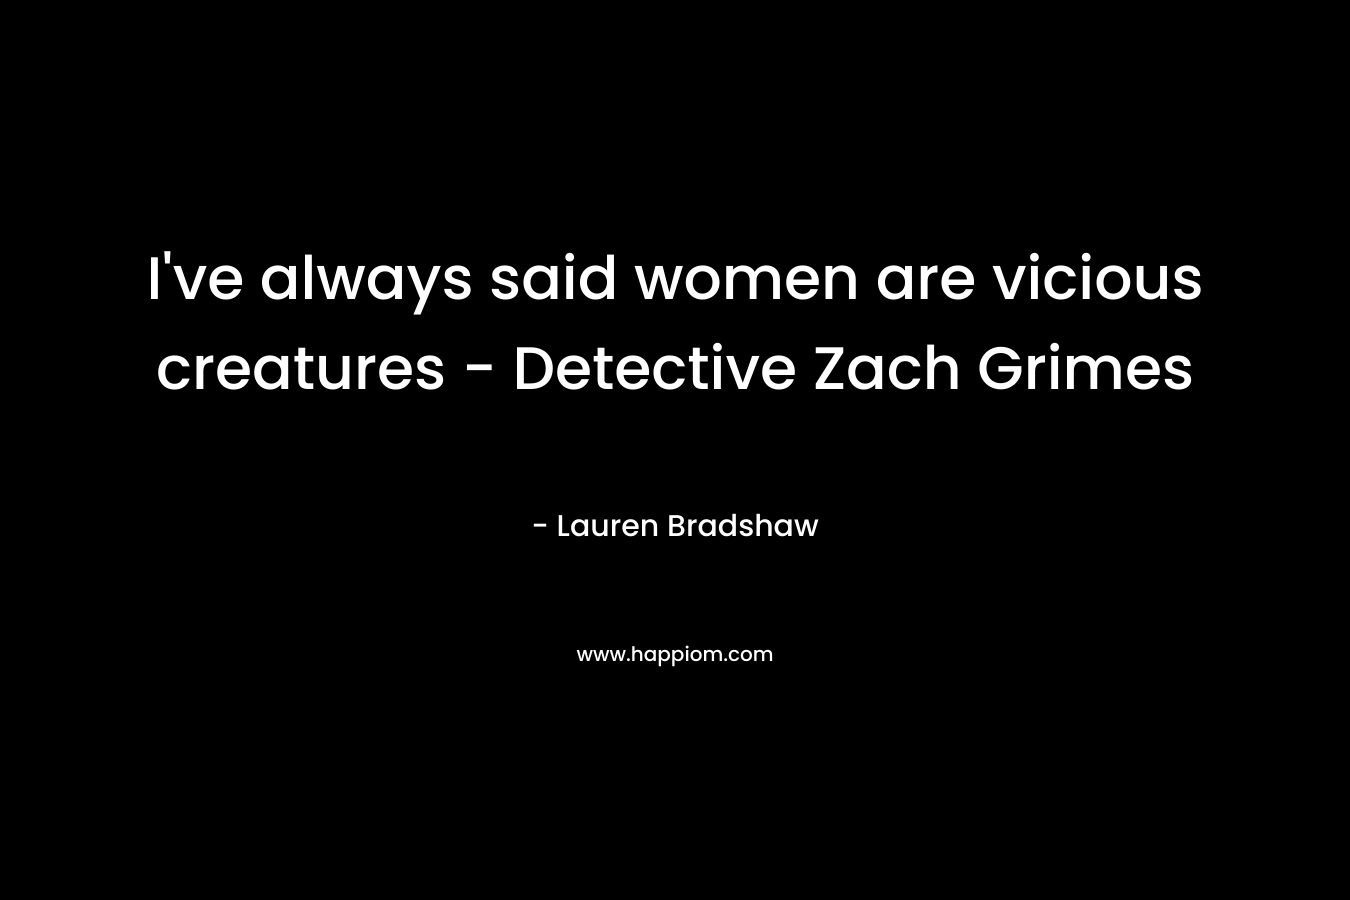 I've always said women are vicious creatures - Detective Zach Grimes